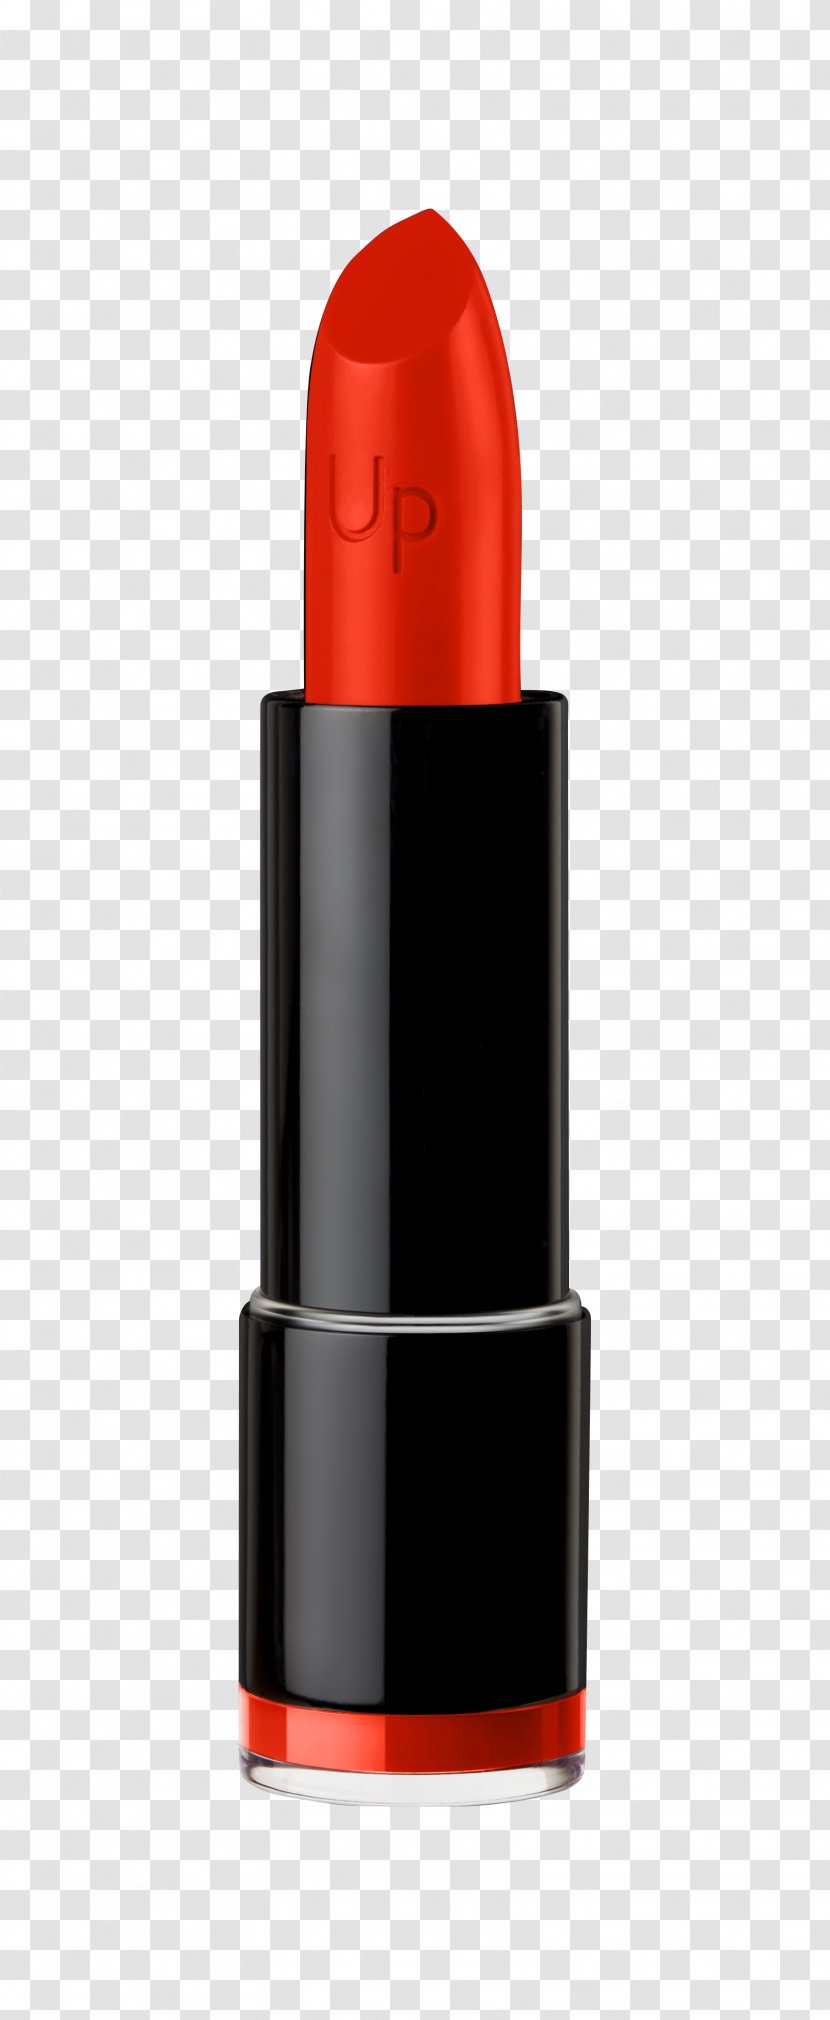 Lipstick Red Make-up Black|Up - Makeup - Transparent Picture Transparent PNG